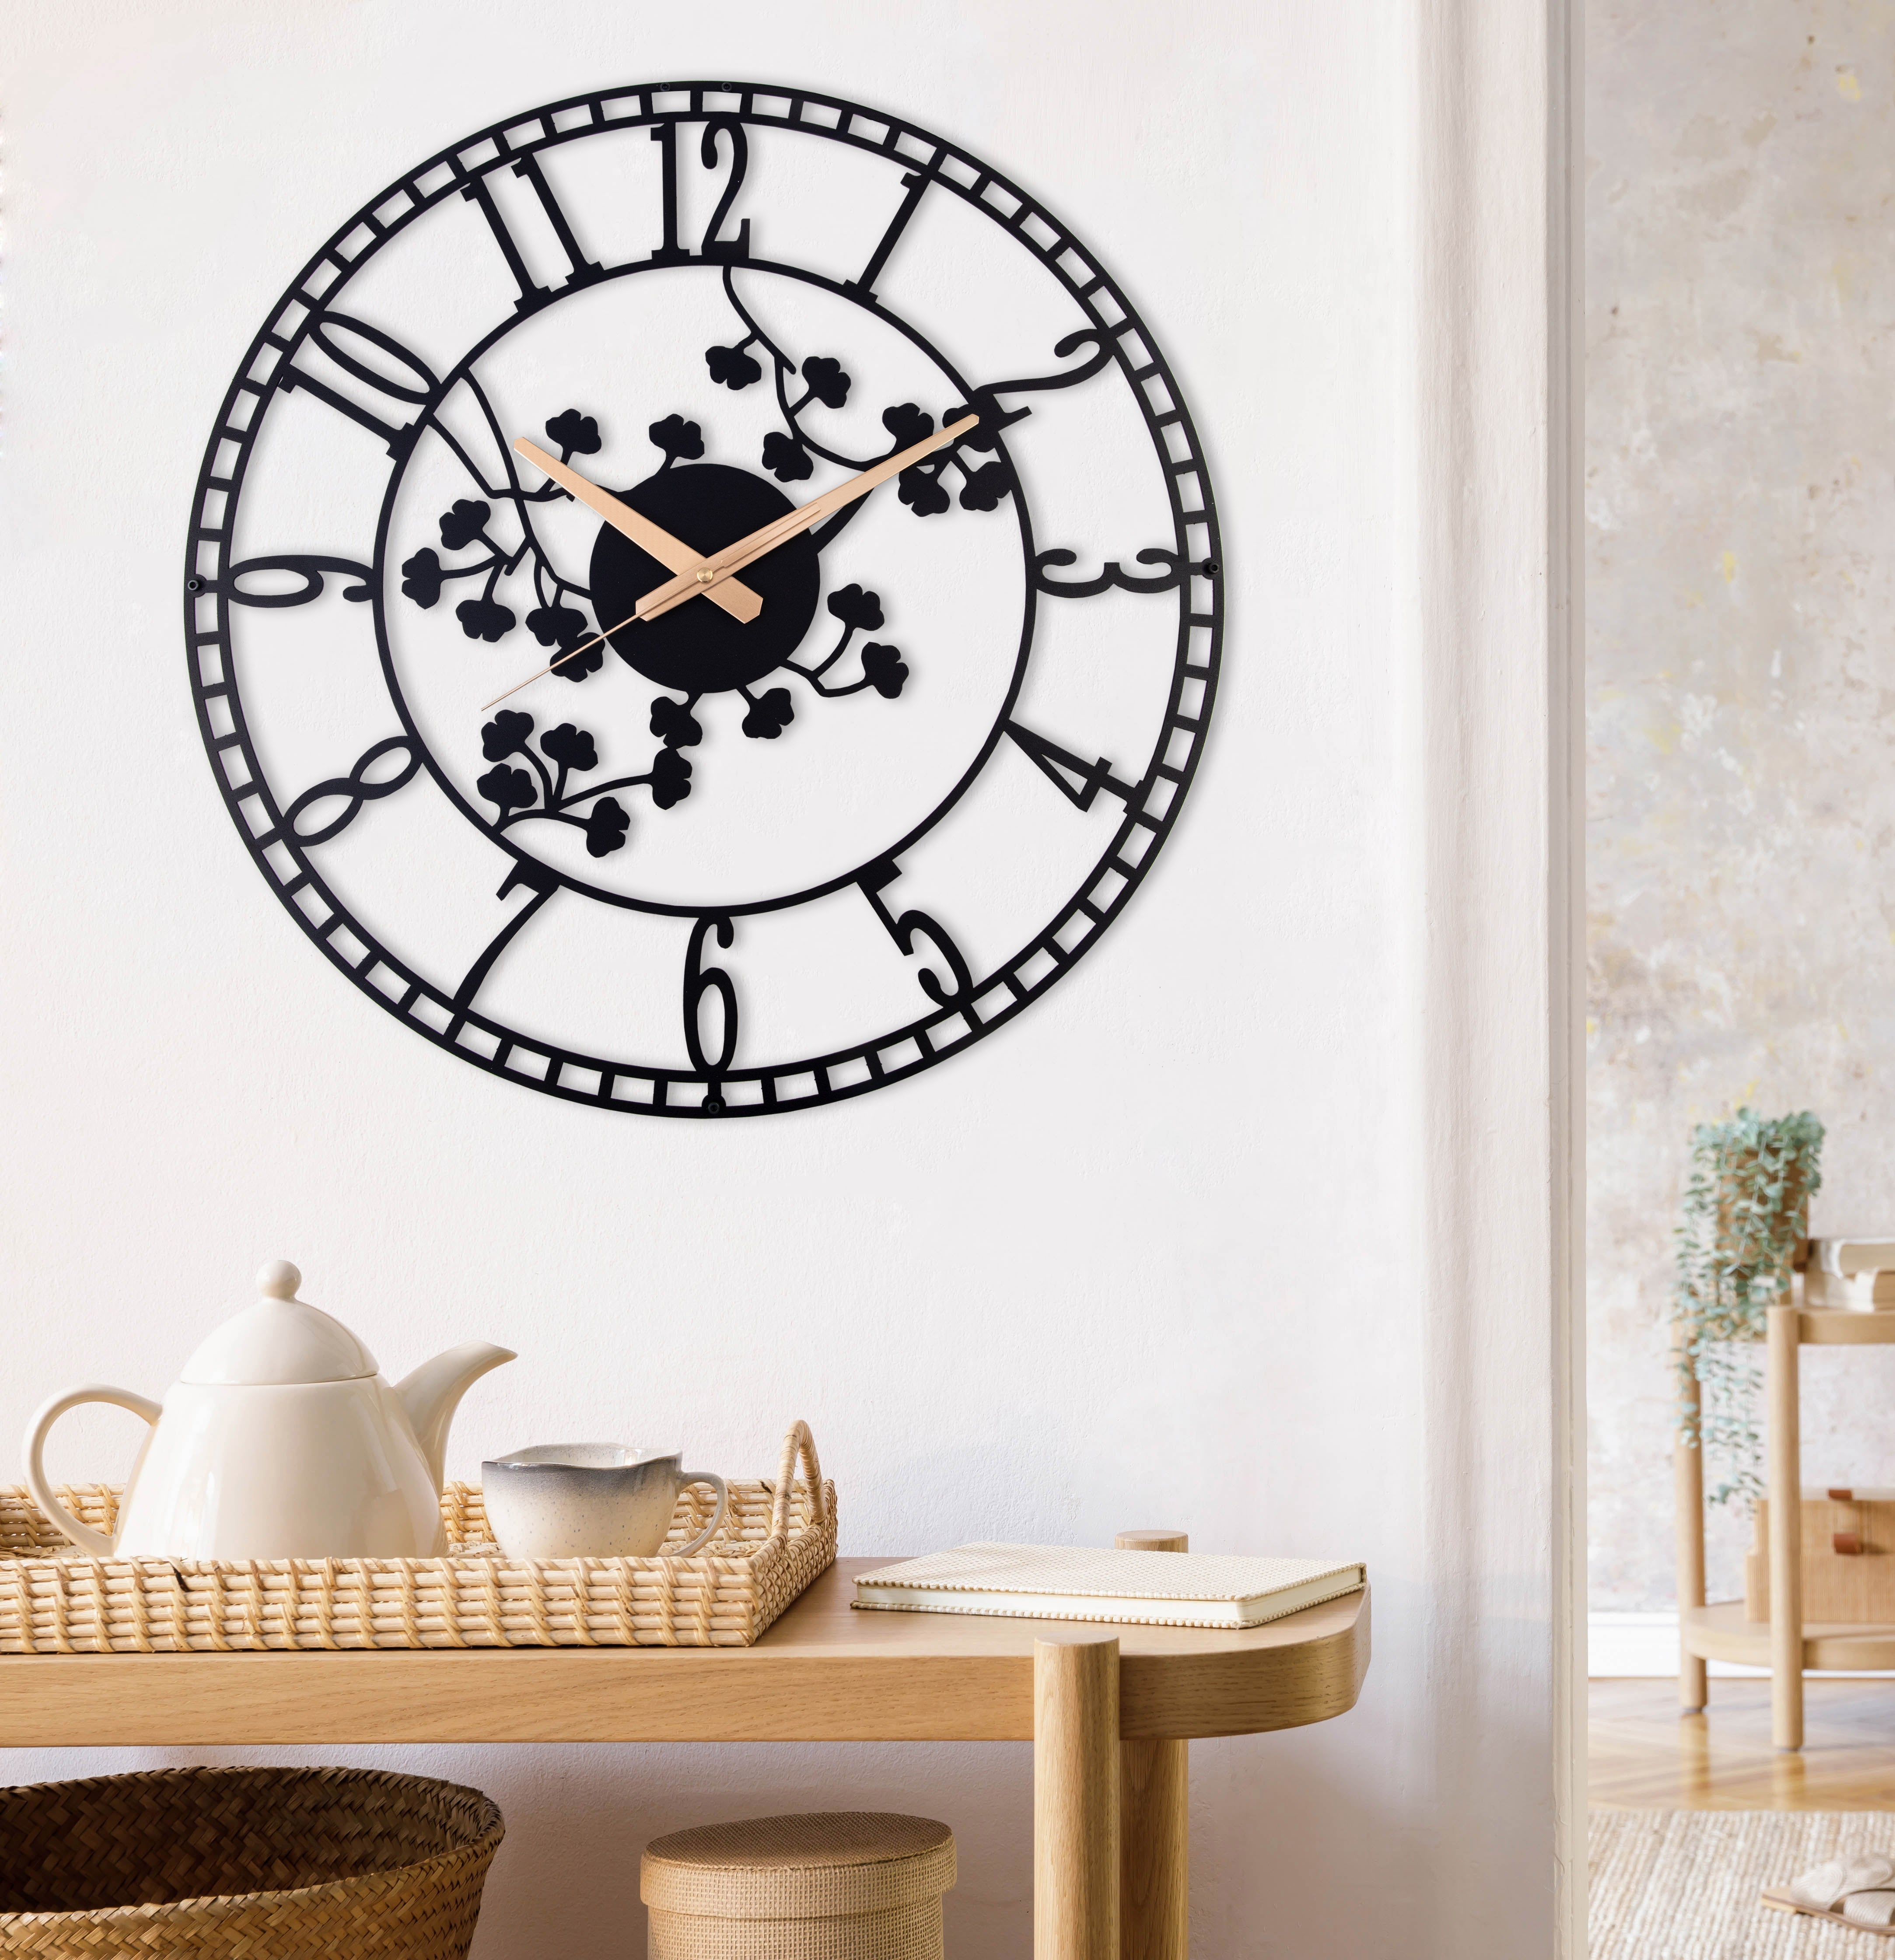 Flowers Wall Clock